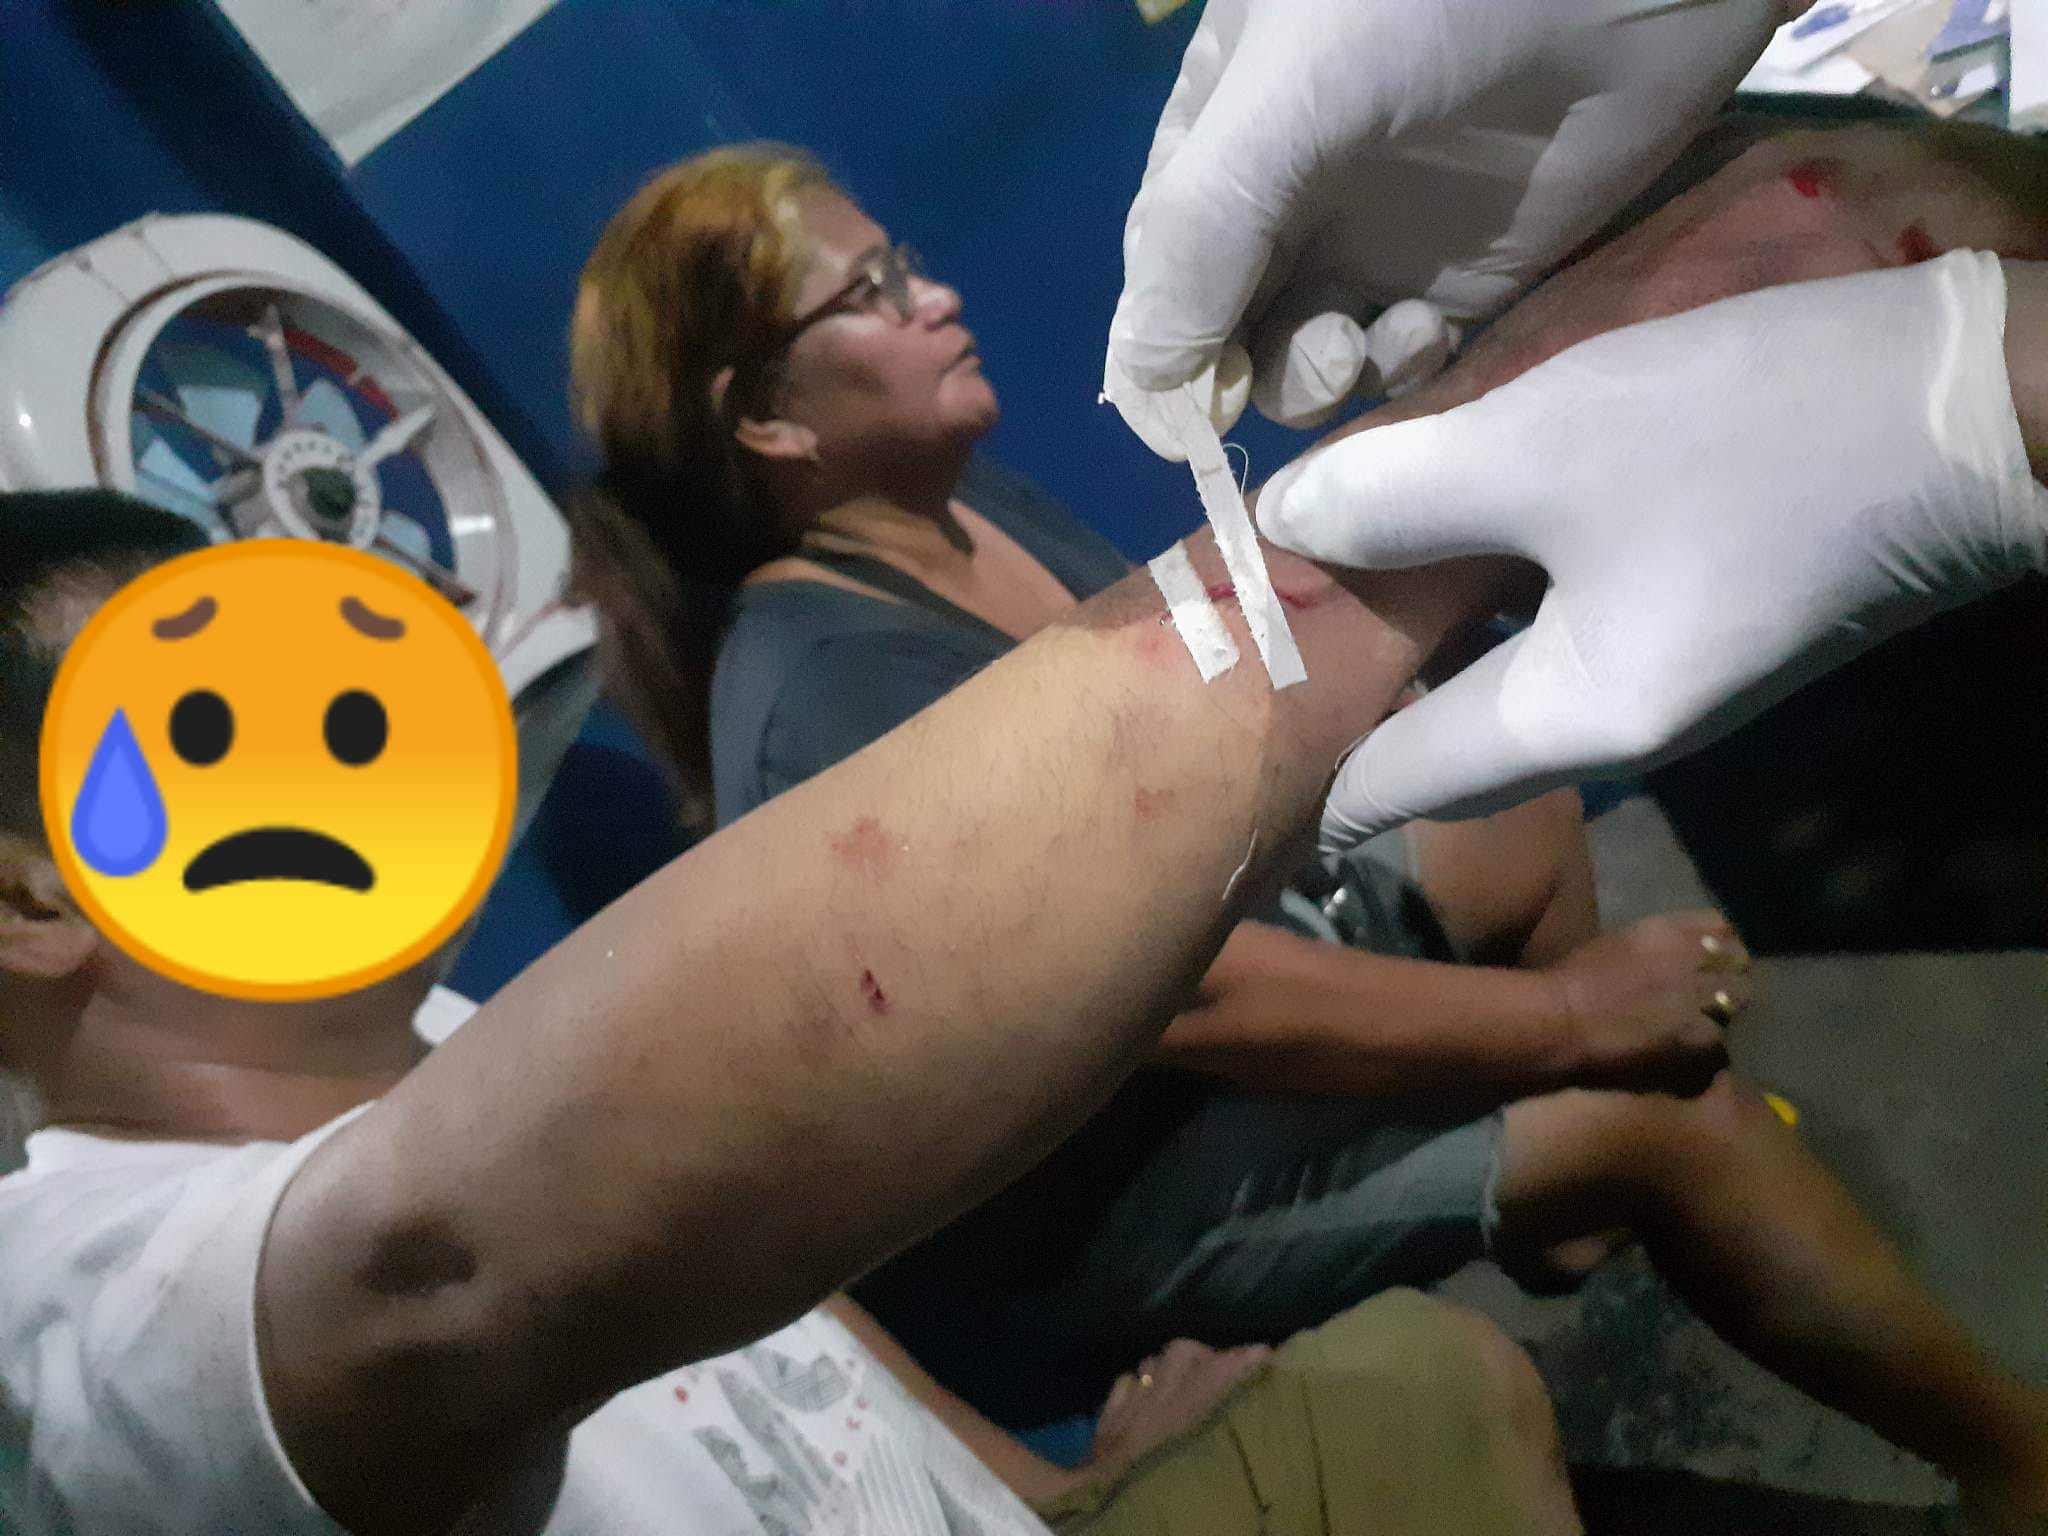 EMR Raptor volunteer first aid victim of stabbing at Police Station 4 – Mario Eleno Canoy Jr.